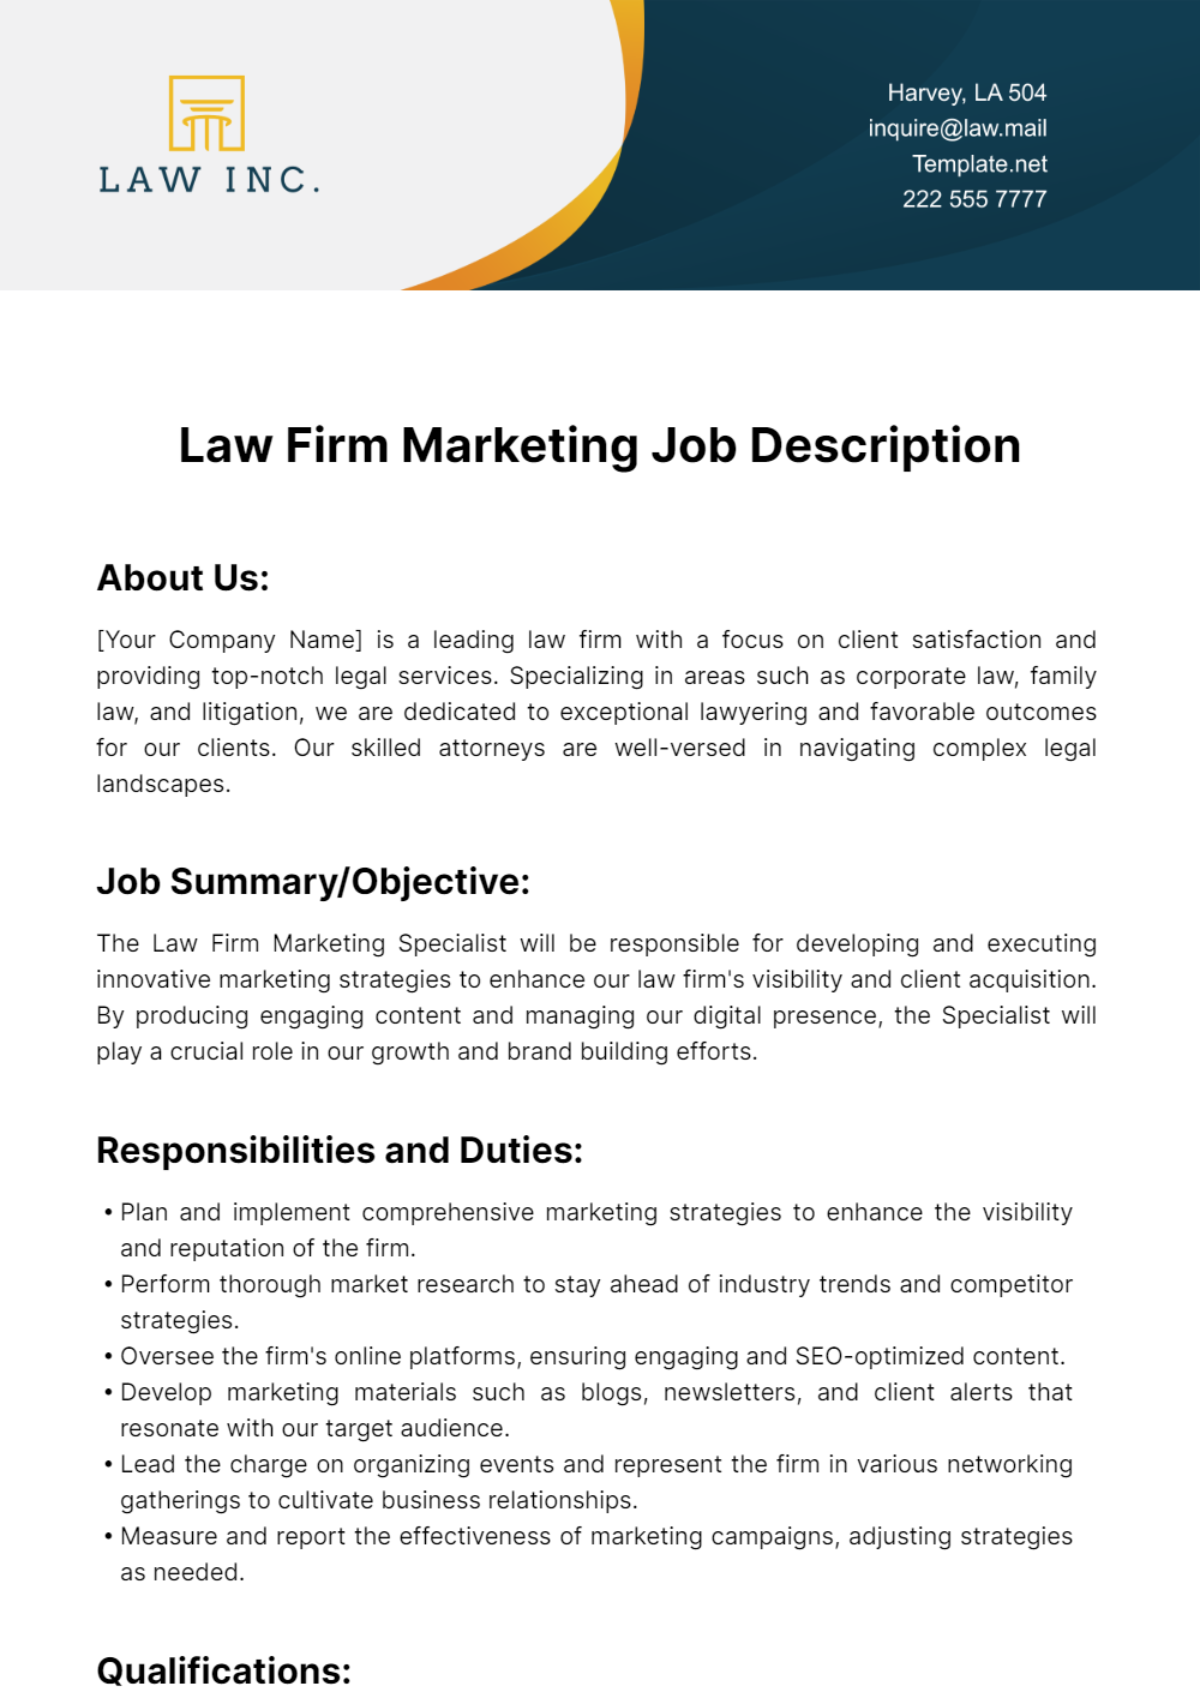 Law Firm Marketing Job Description Template